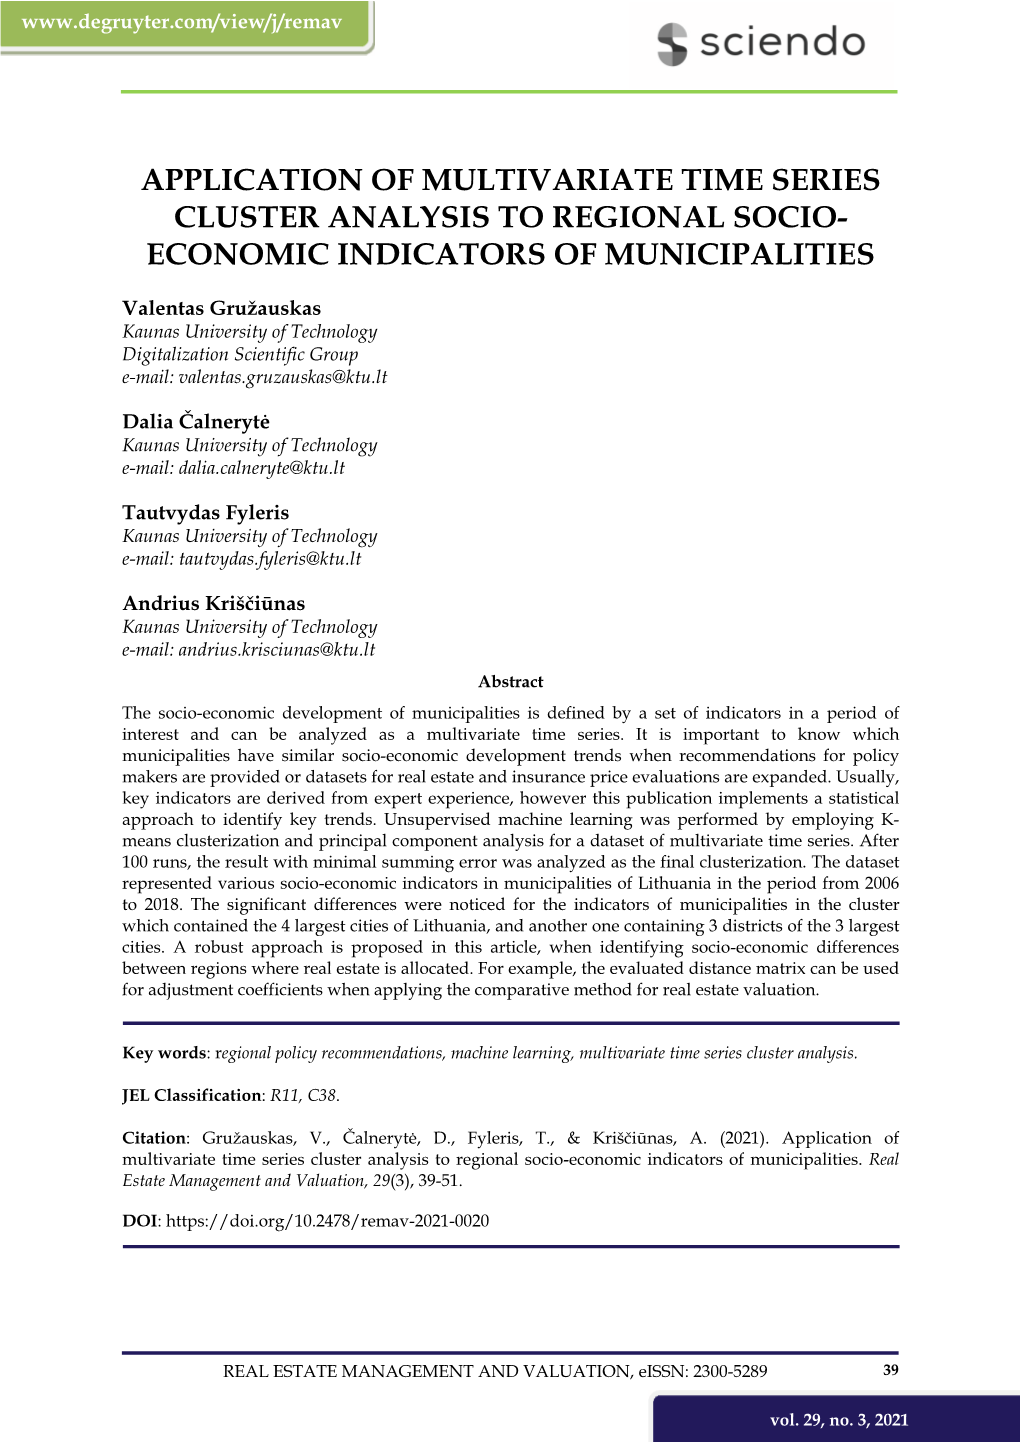 Economic Indicators of Municipalities